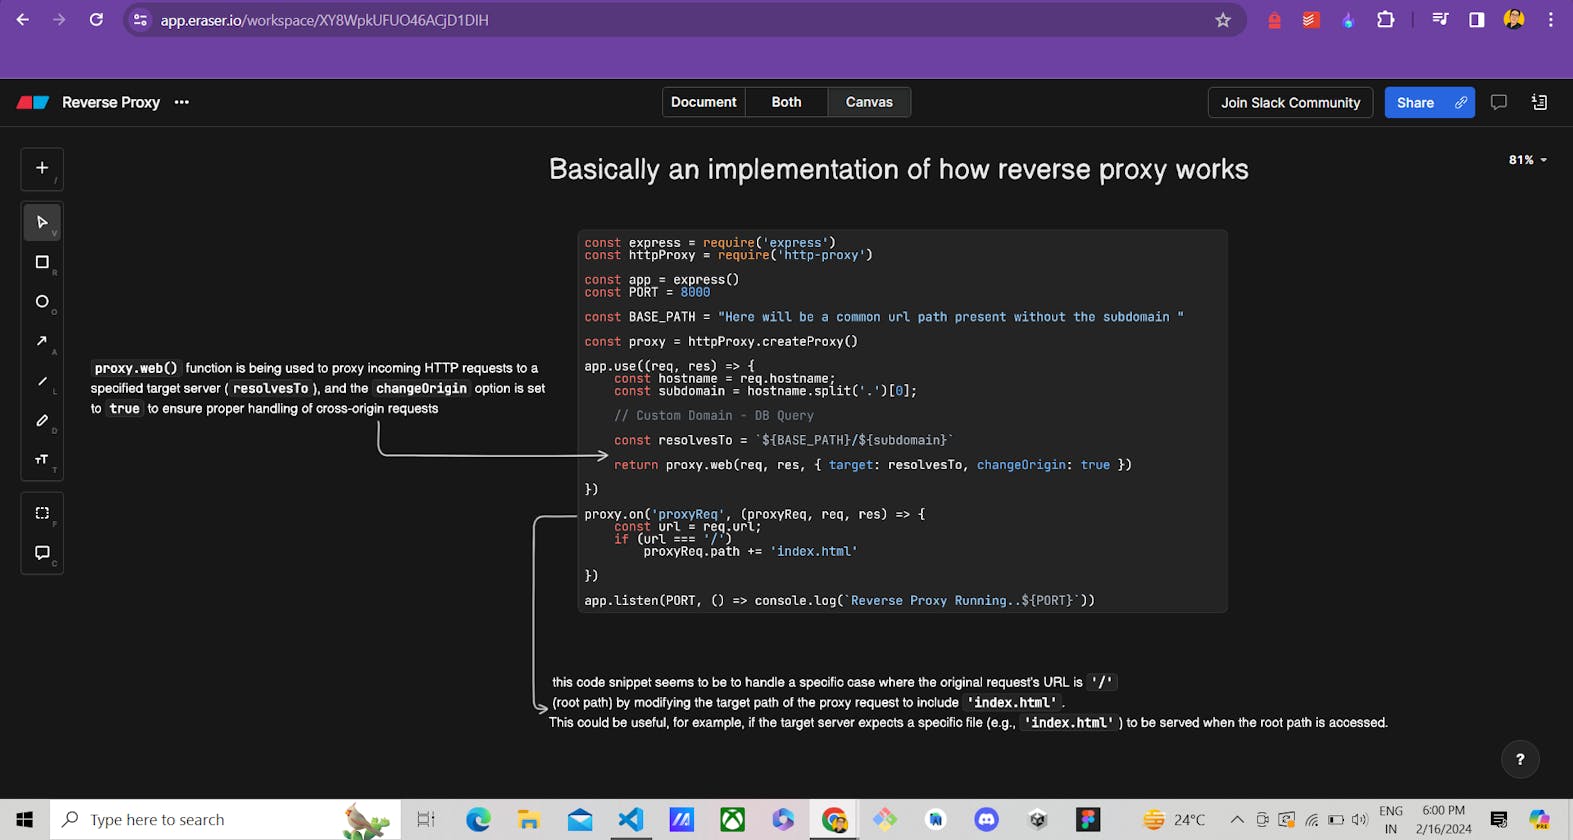 Implementation of Reverse Proxy in Node js